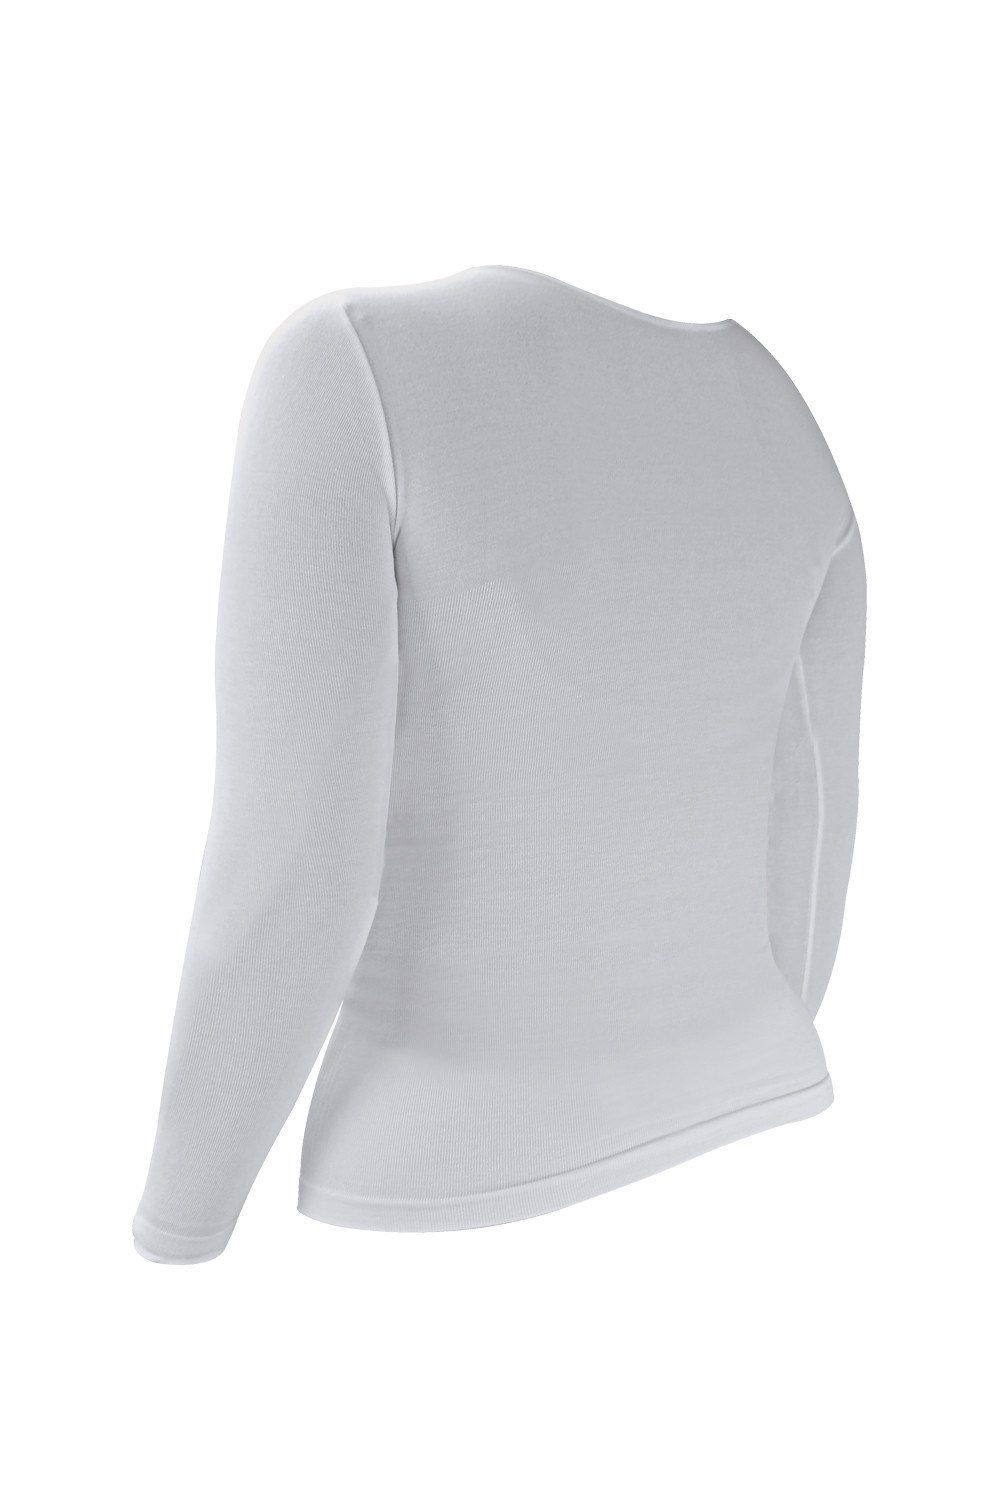 FARUTA Warm Top， Ladies Ultra Thin Thermal Underwear Bottoming Shirt Top  Round Neck Shirt Long Sleeve Underwear Grey (Color : Hortel�, Size : XXL):  Buy Online at Best Price in UAE 